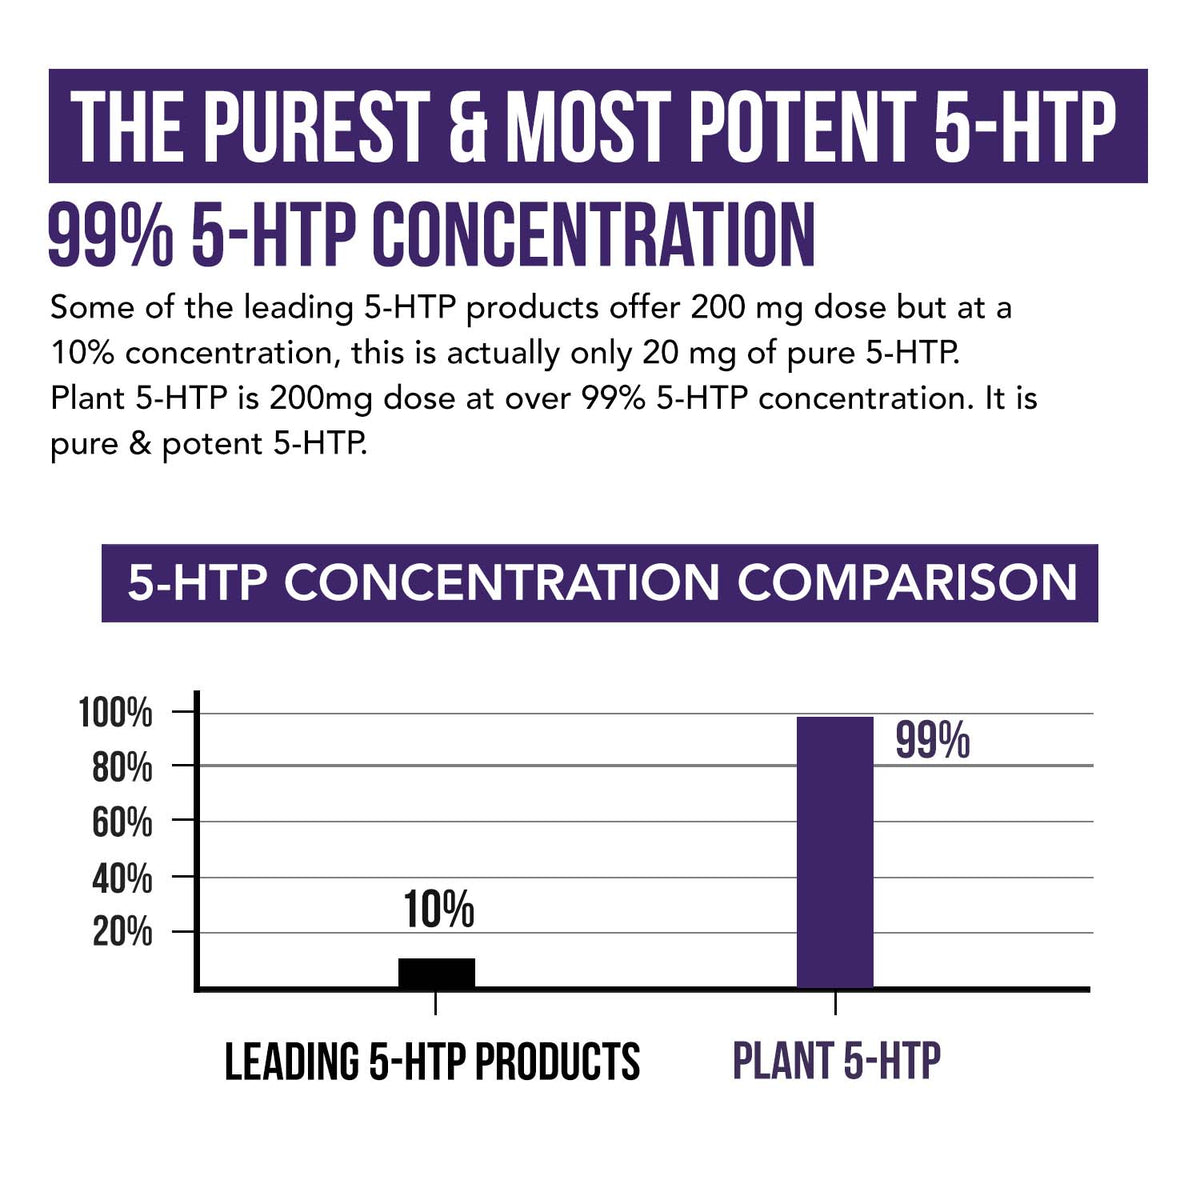 Plant 5-HTP